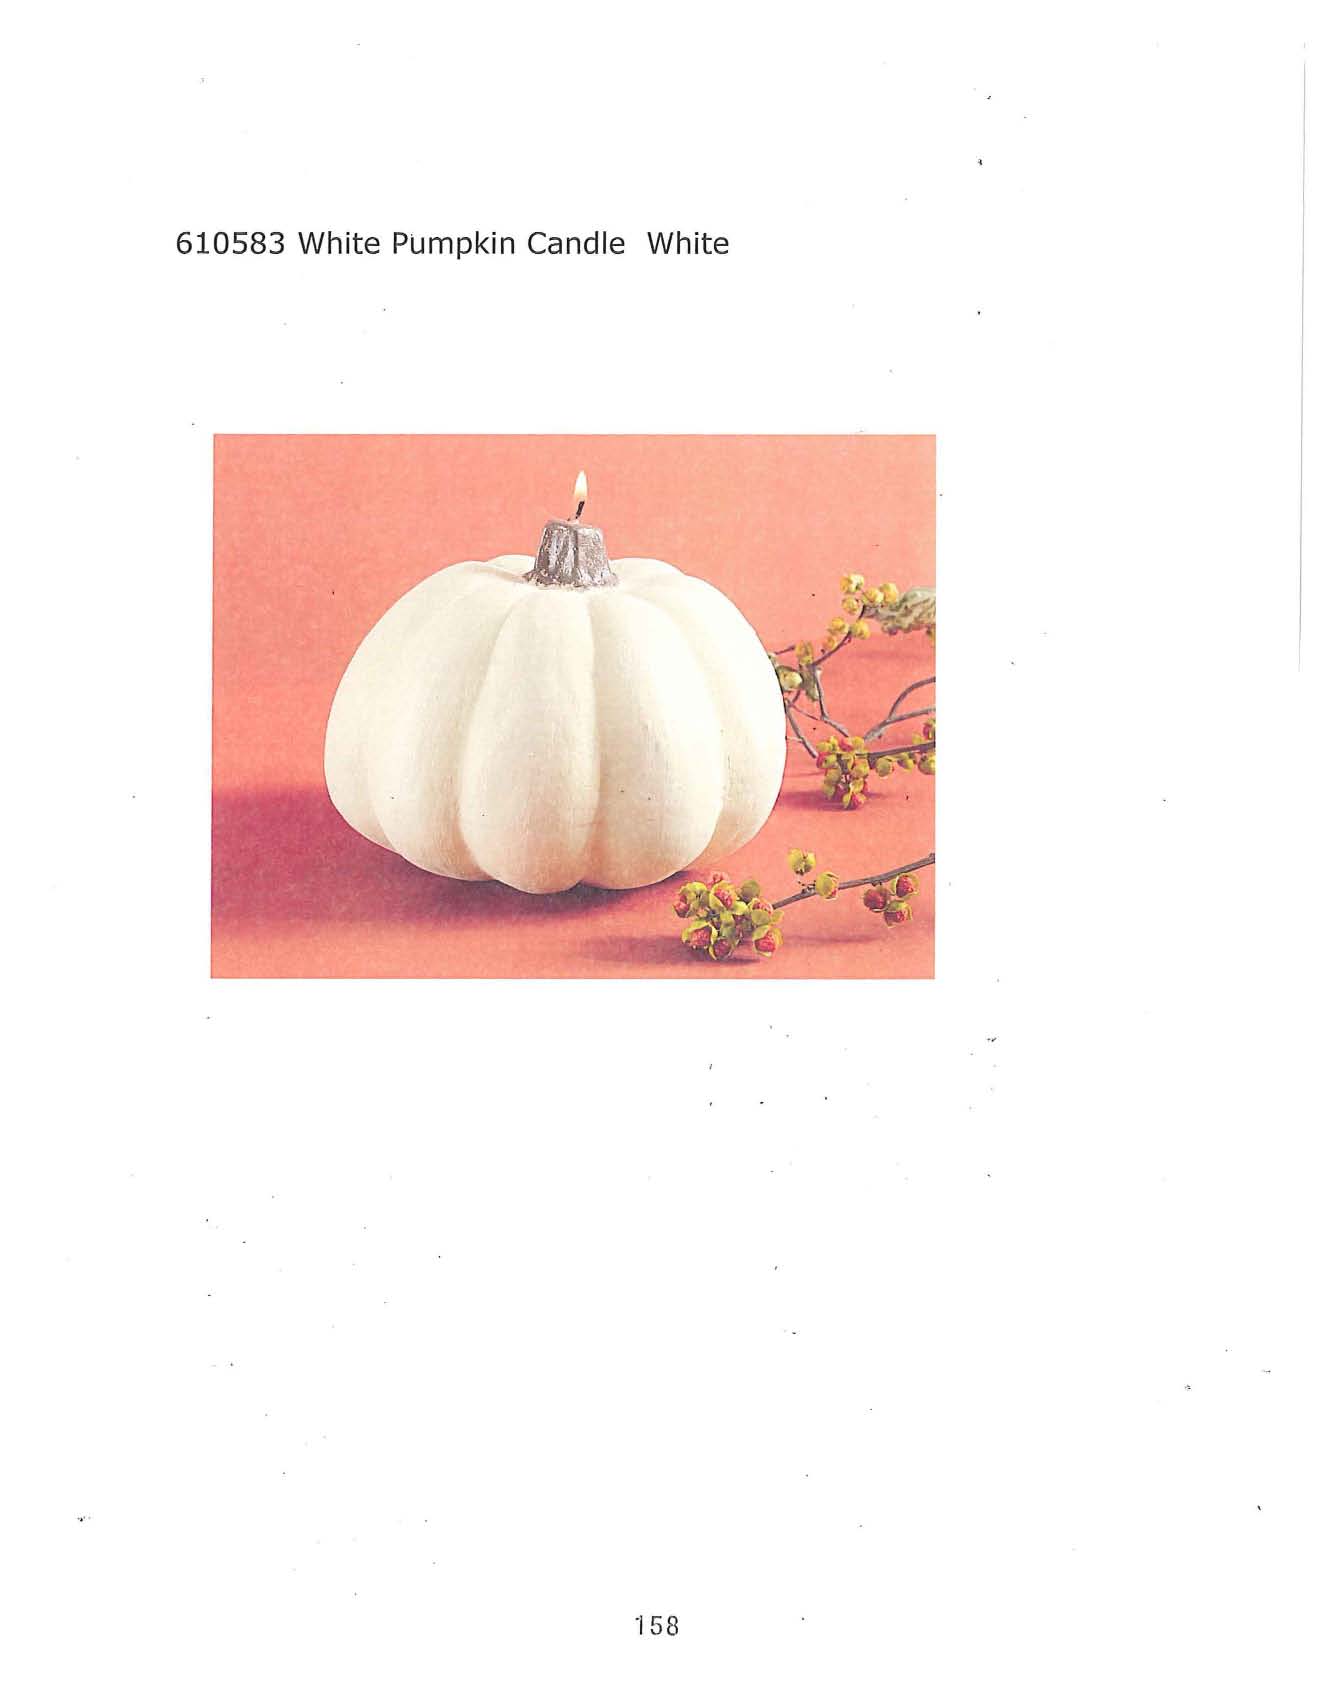 White Pumpkin Candle - White